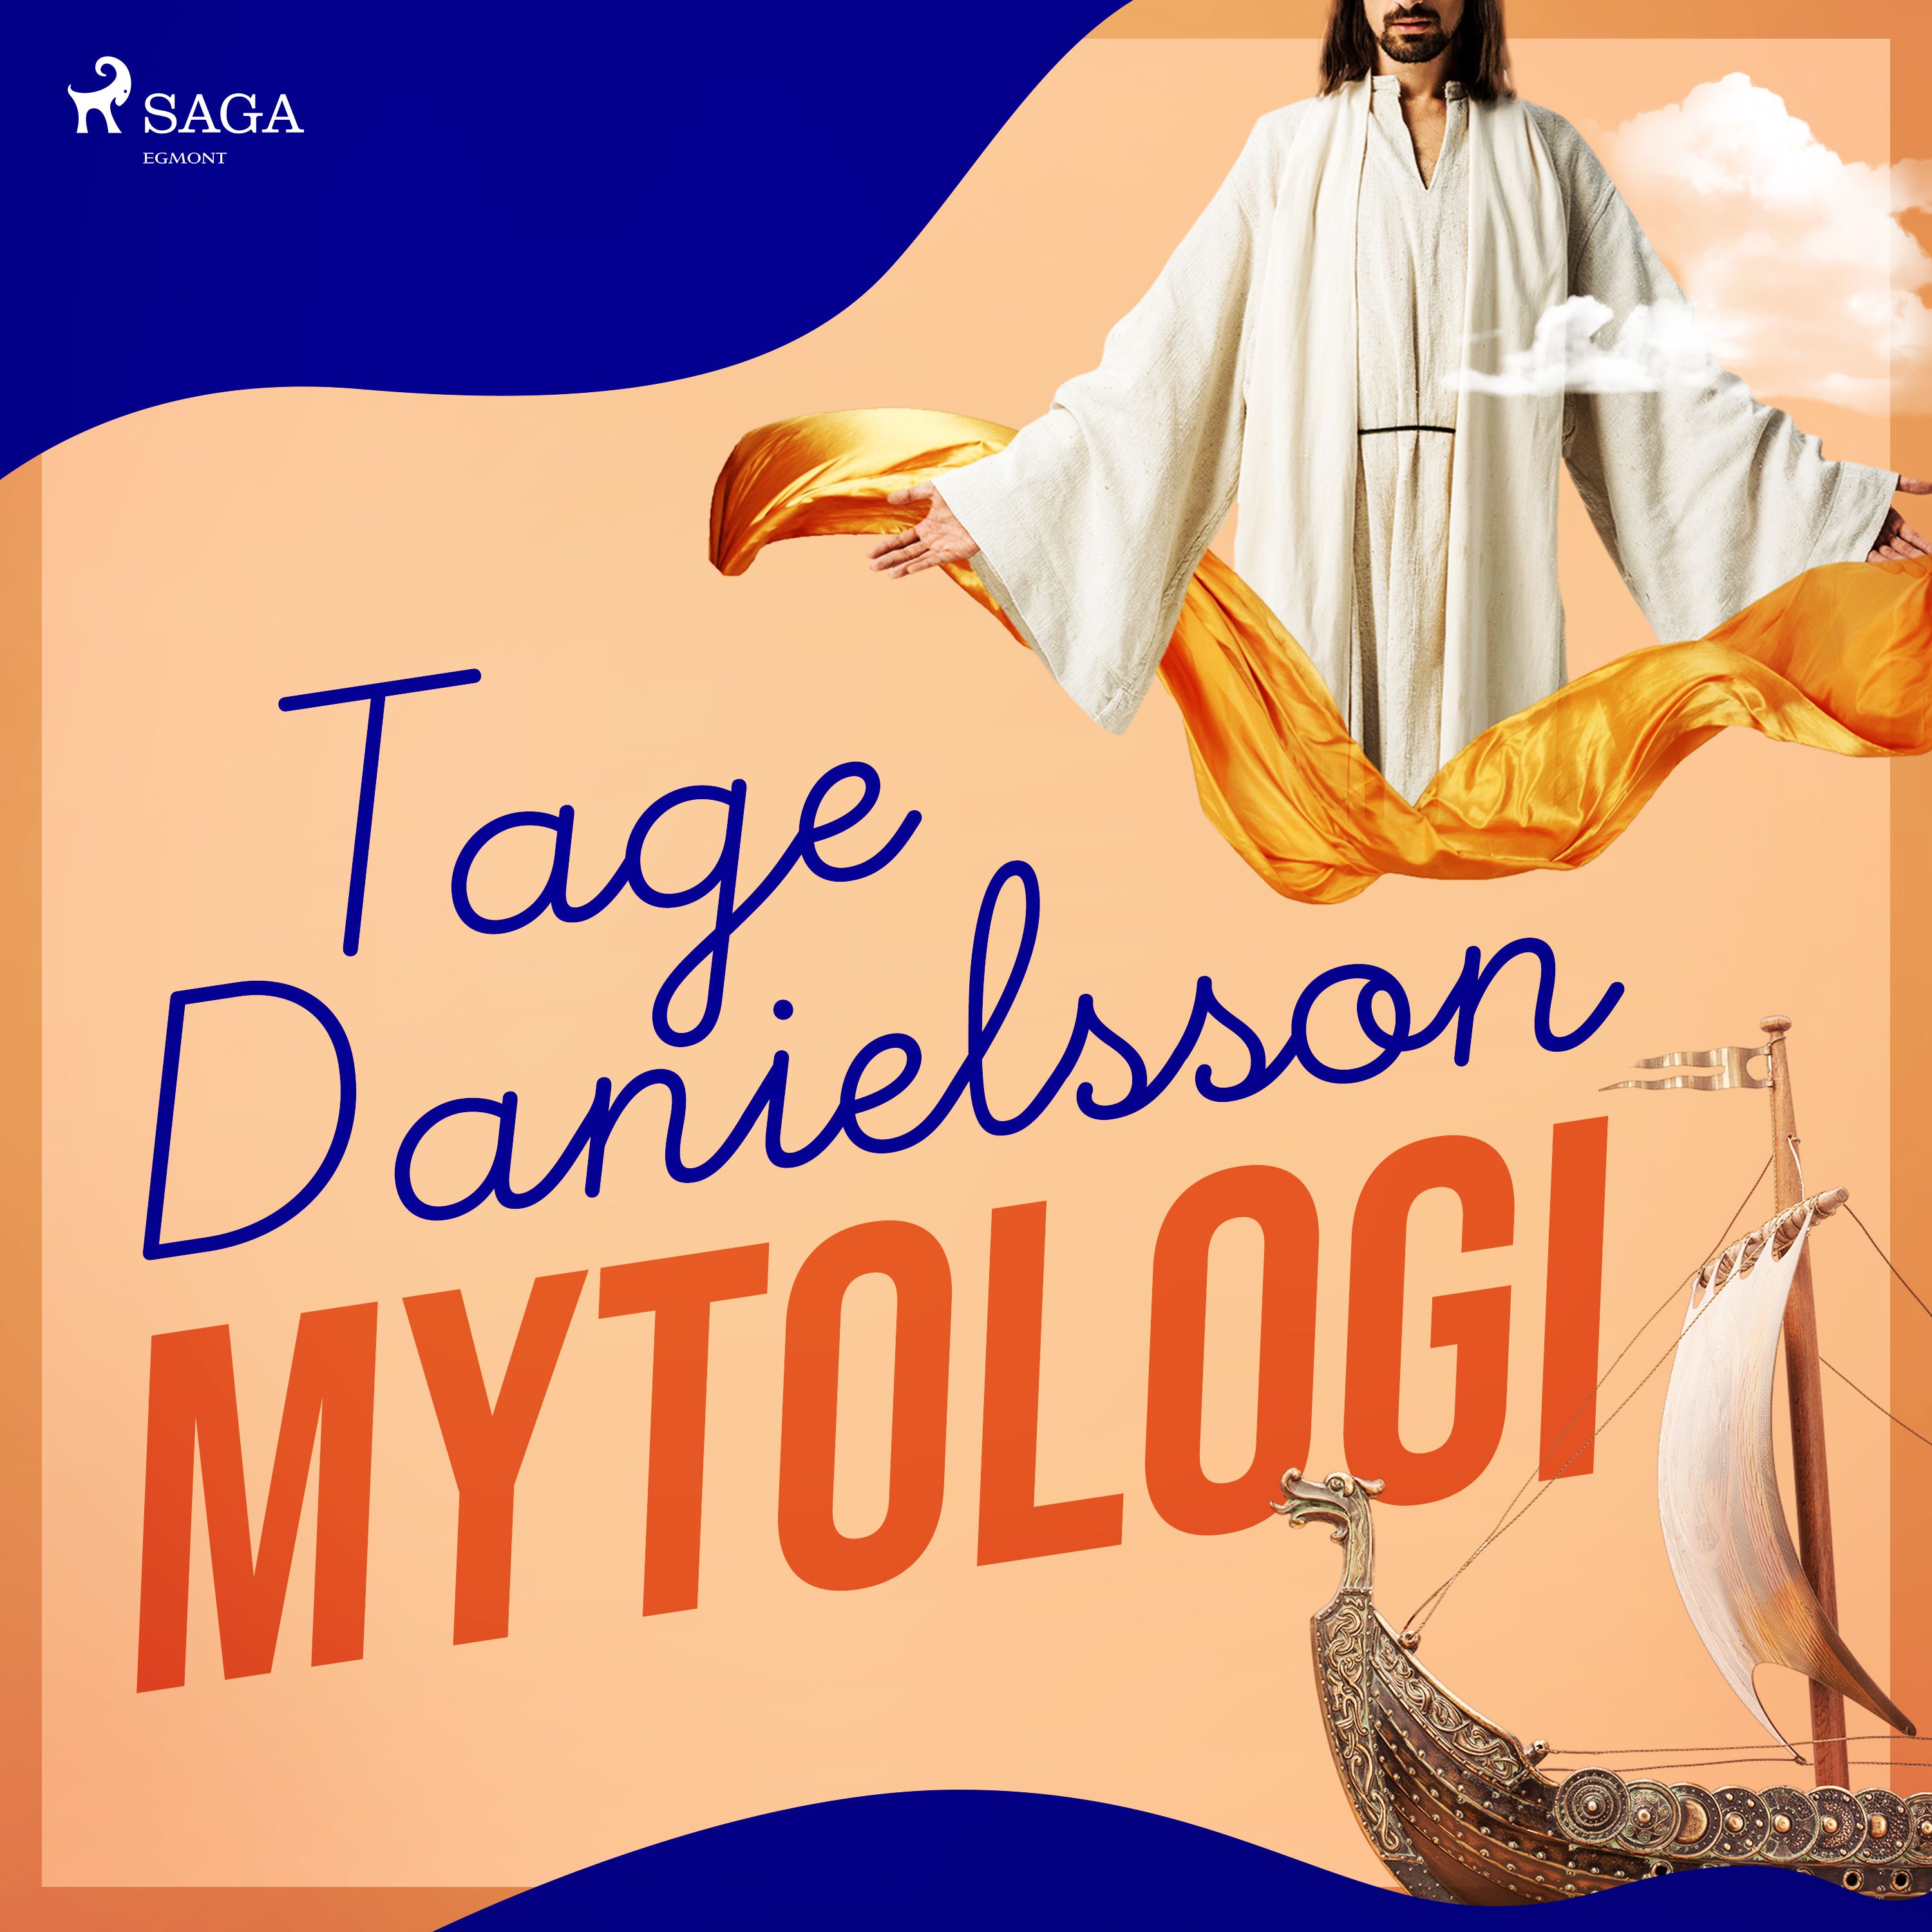 Mytologi, lydbog af Tage Danielsson